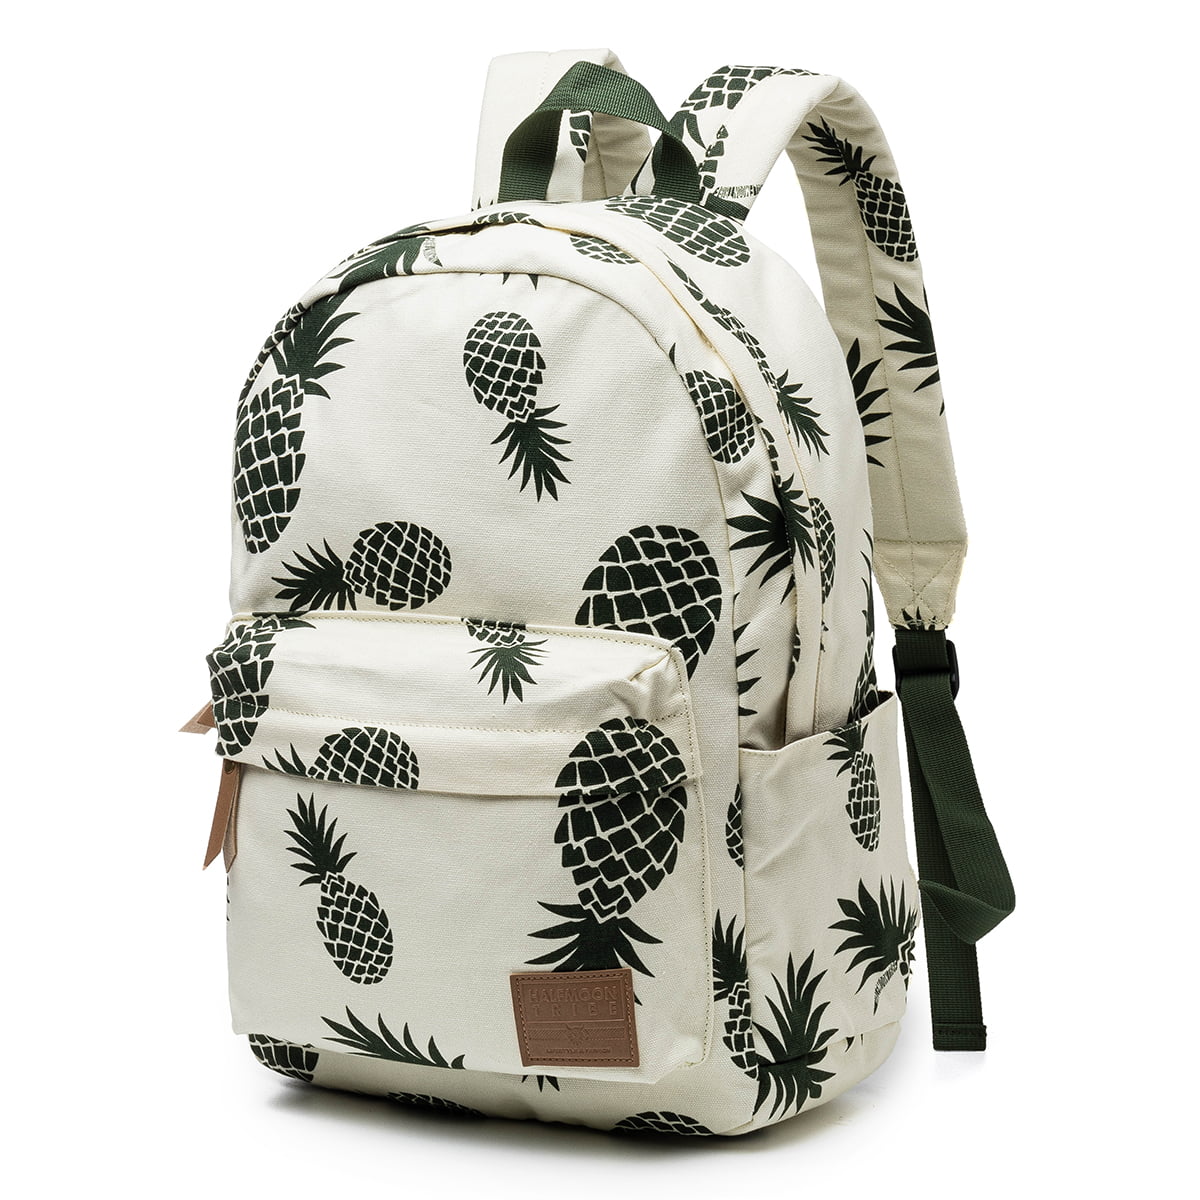 PU Leather Shoulder Bag,Pineapple Cat Wine Backpack,Portable Travel School Rucksack,Satchel with Top Handle 